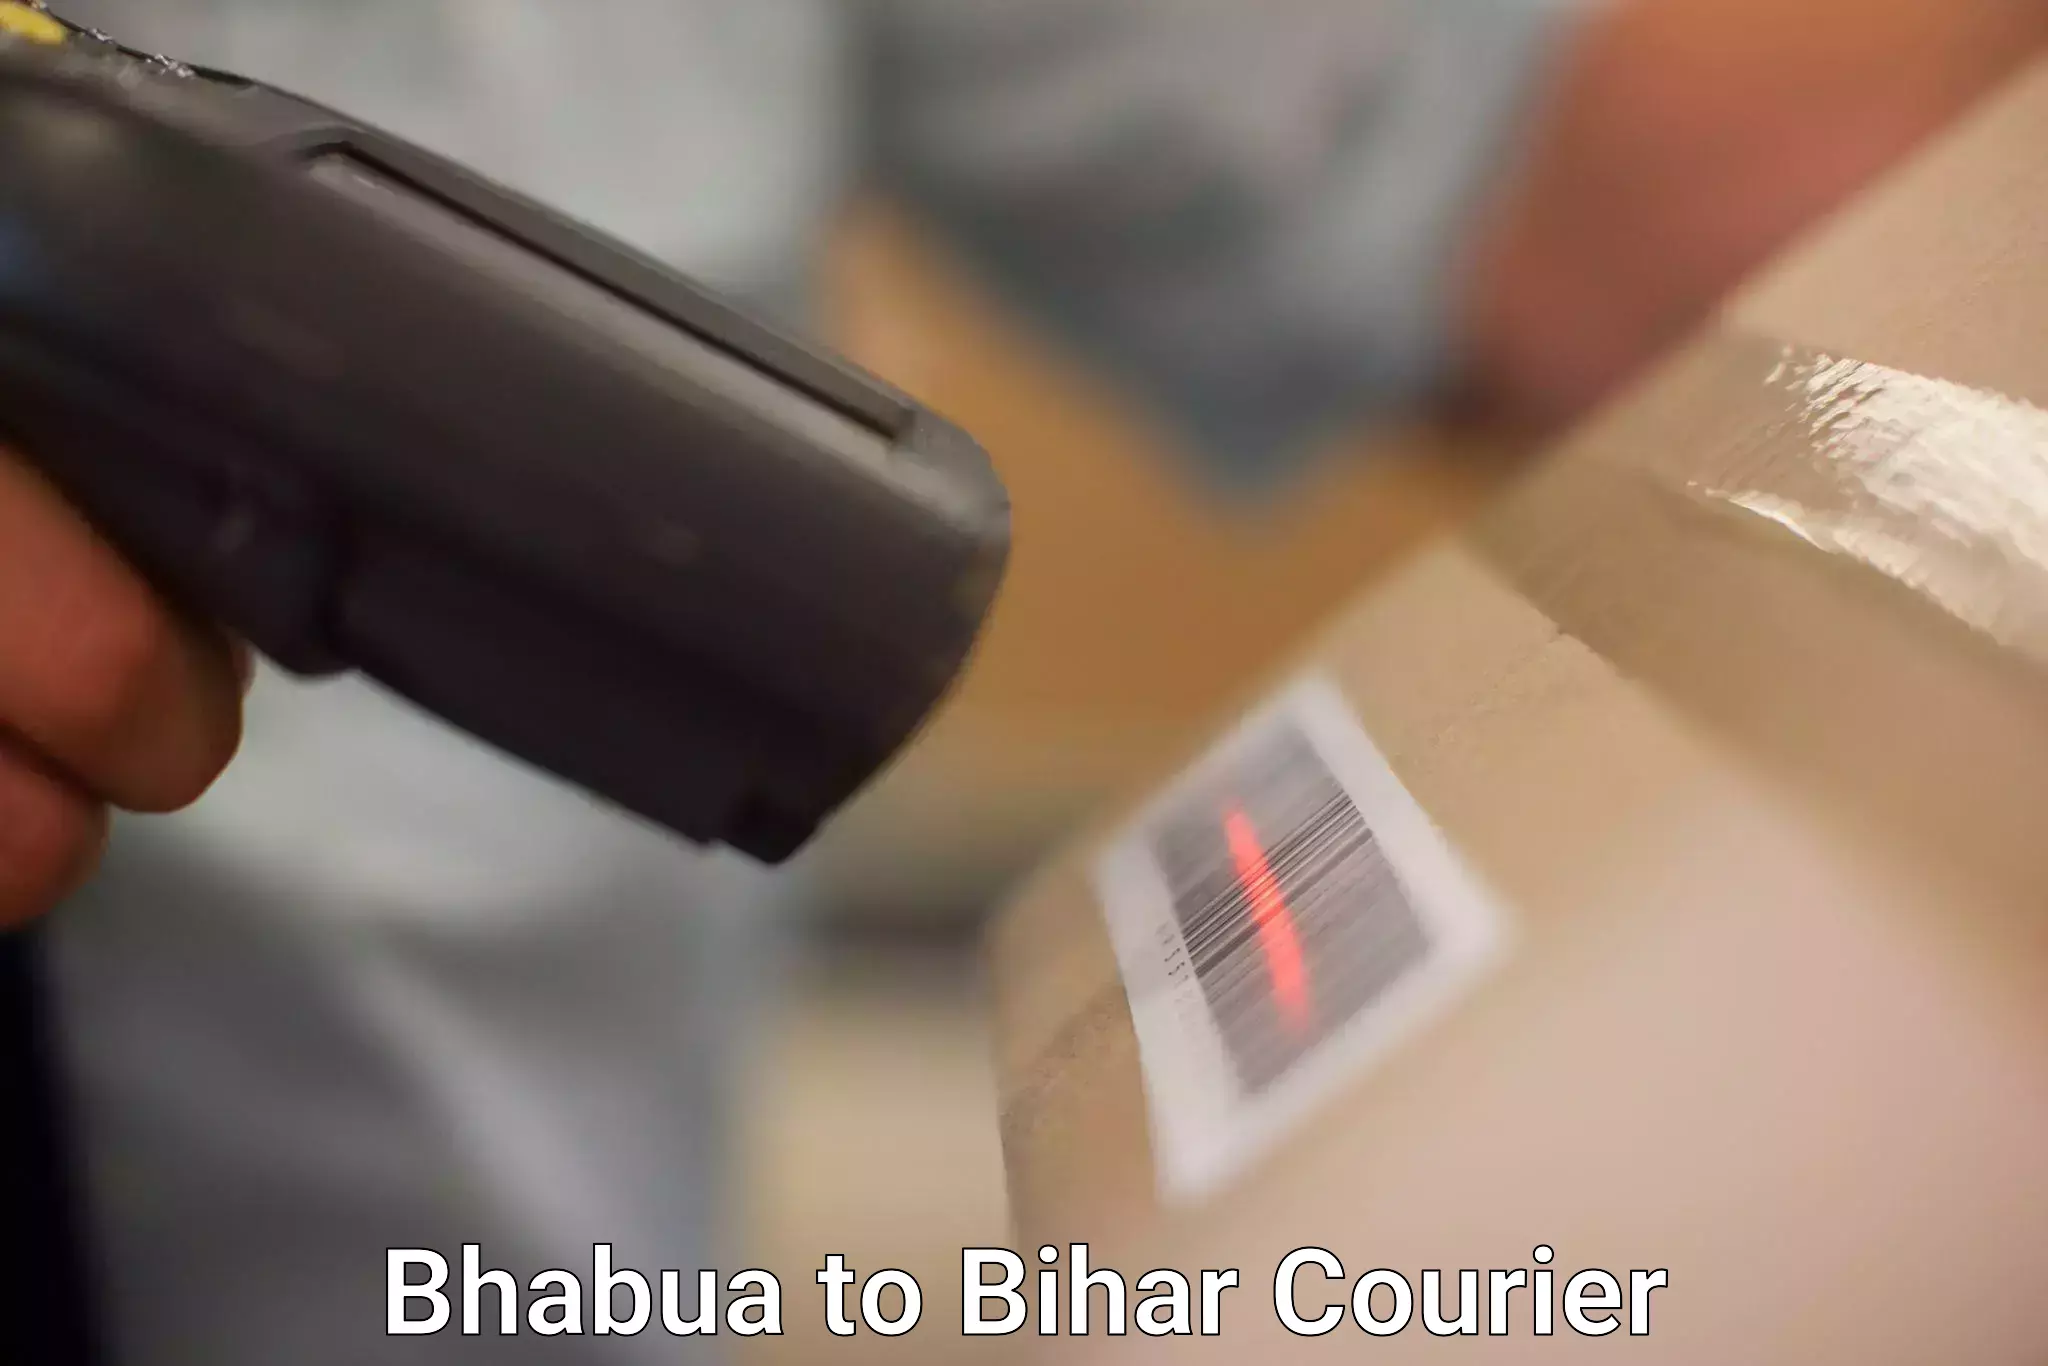 Courier service comparison Bhabua to Buxar